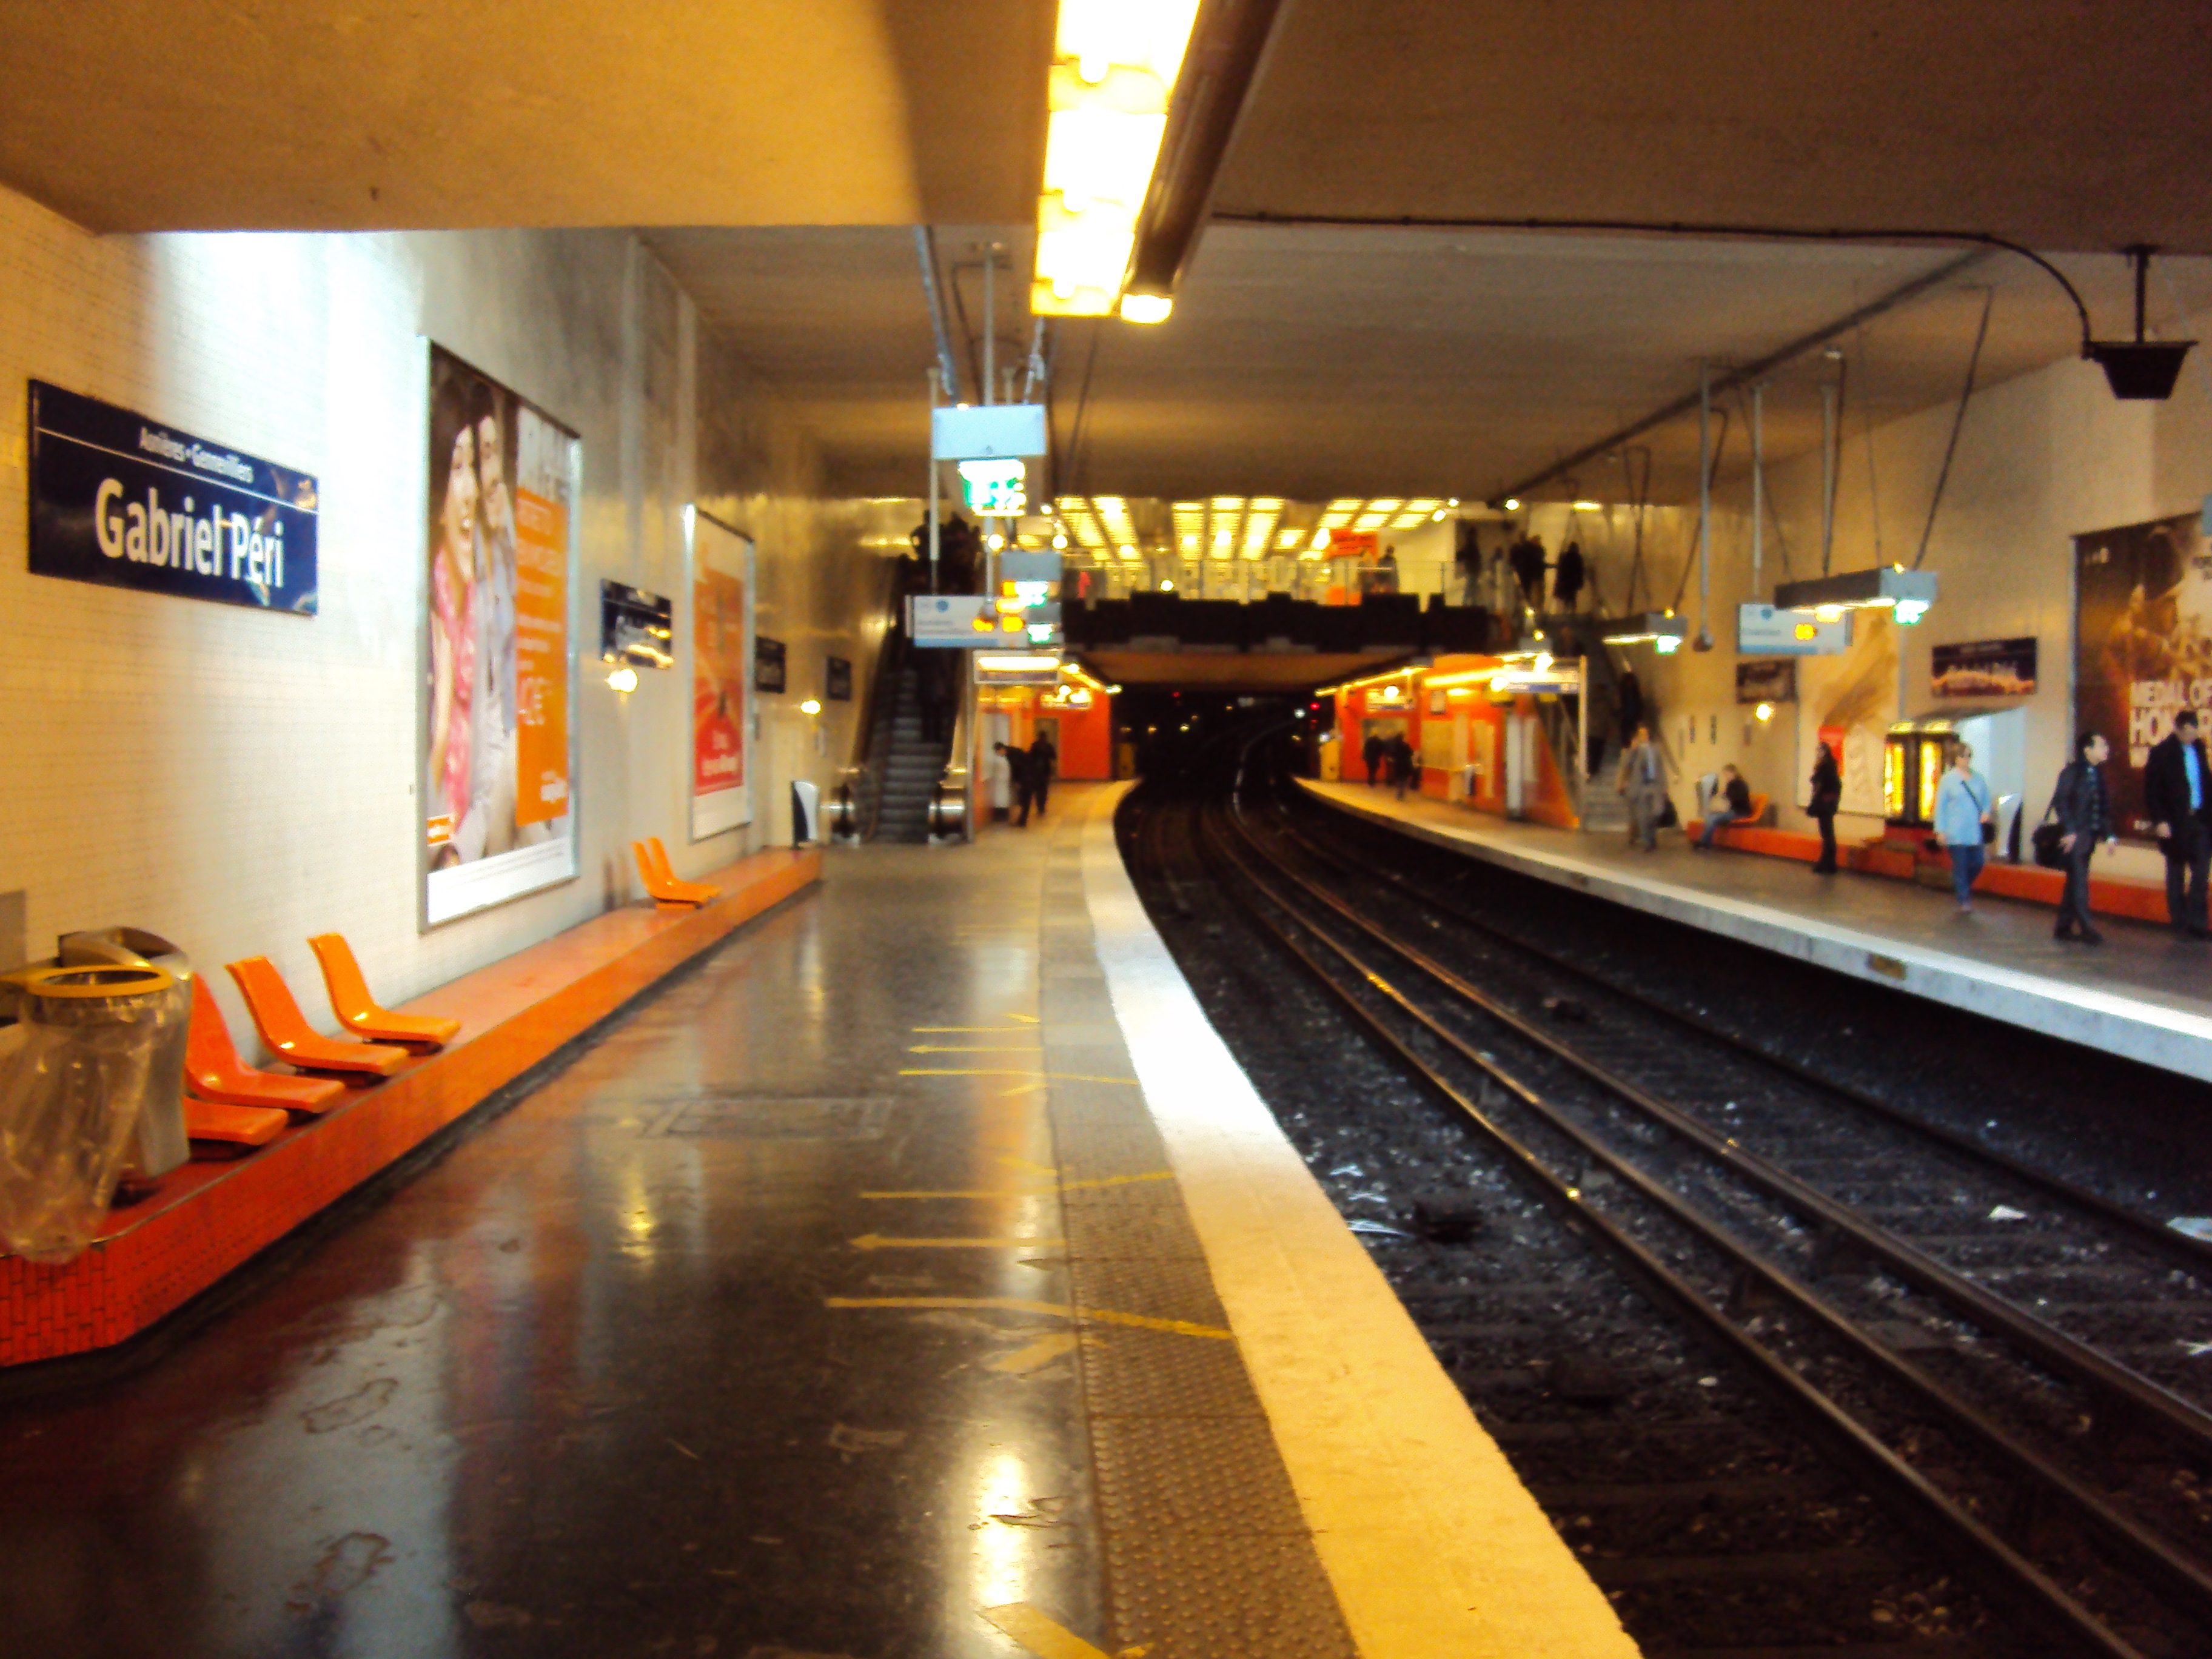 Gabriel Péri (stanice metra v Paříži)